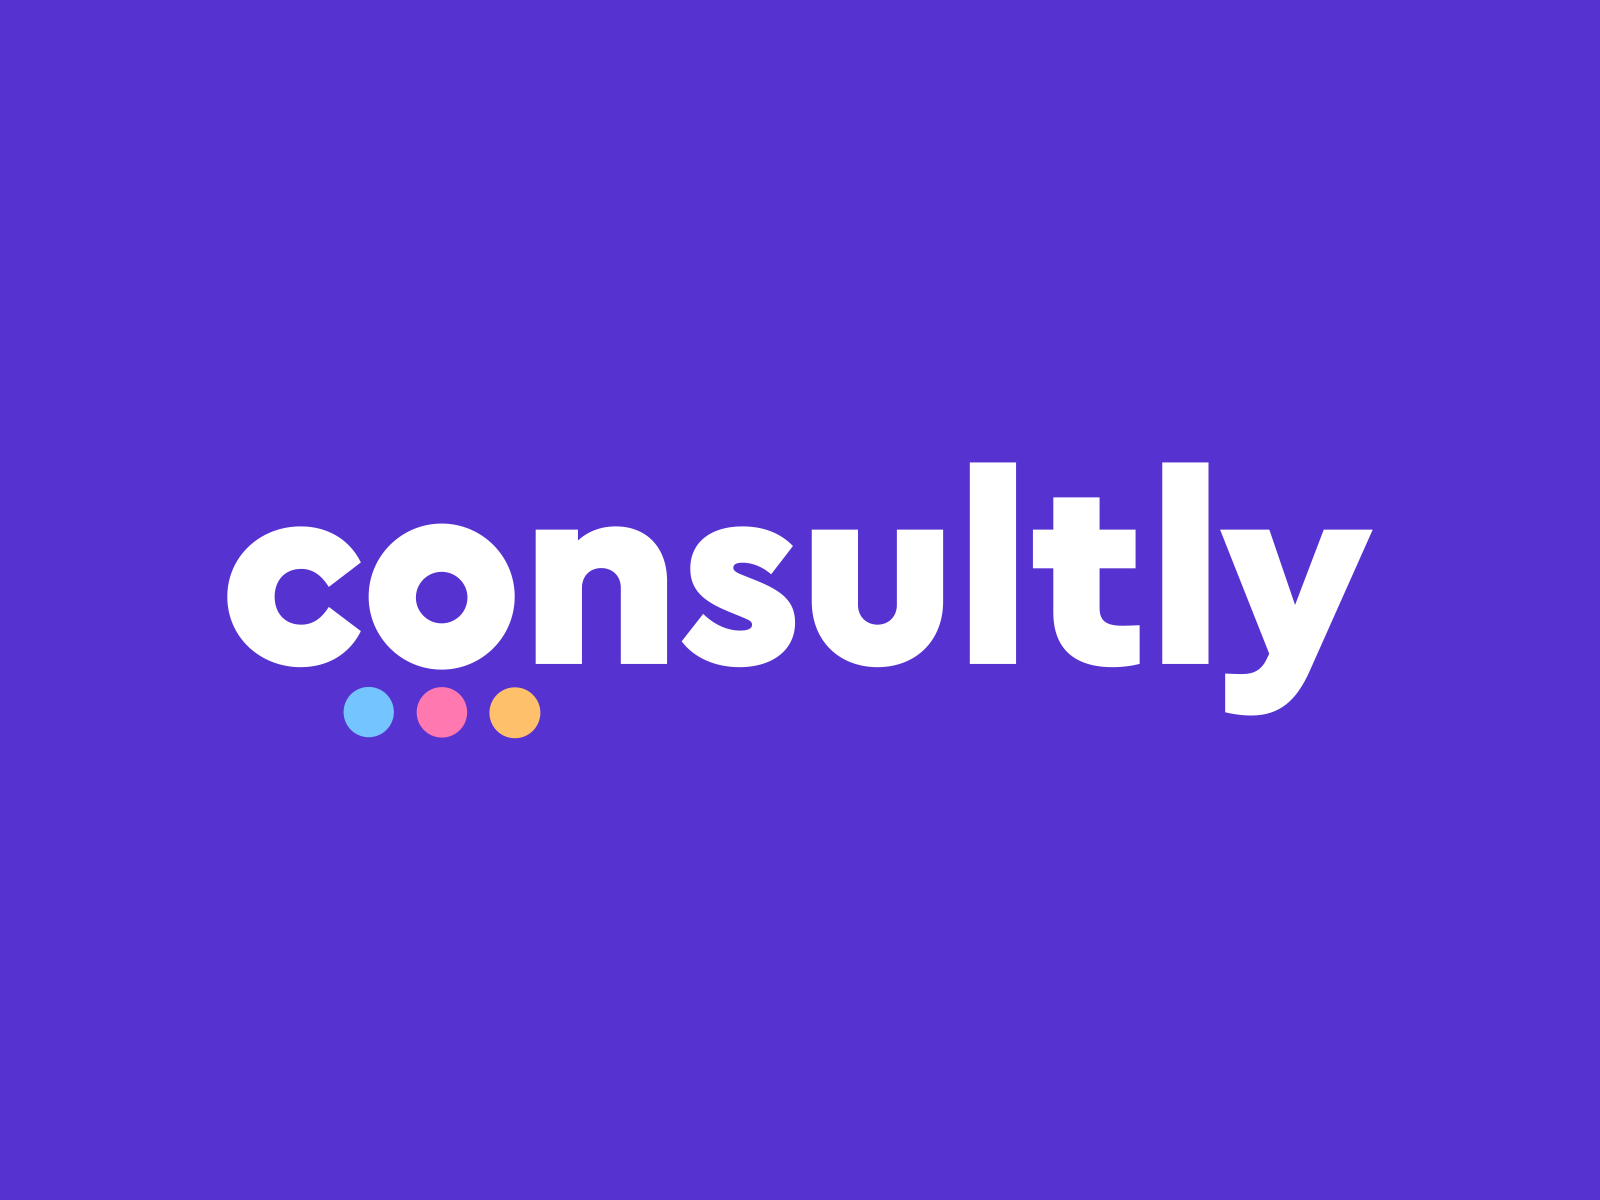 Consultly logo animation